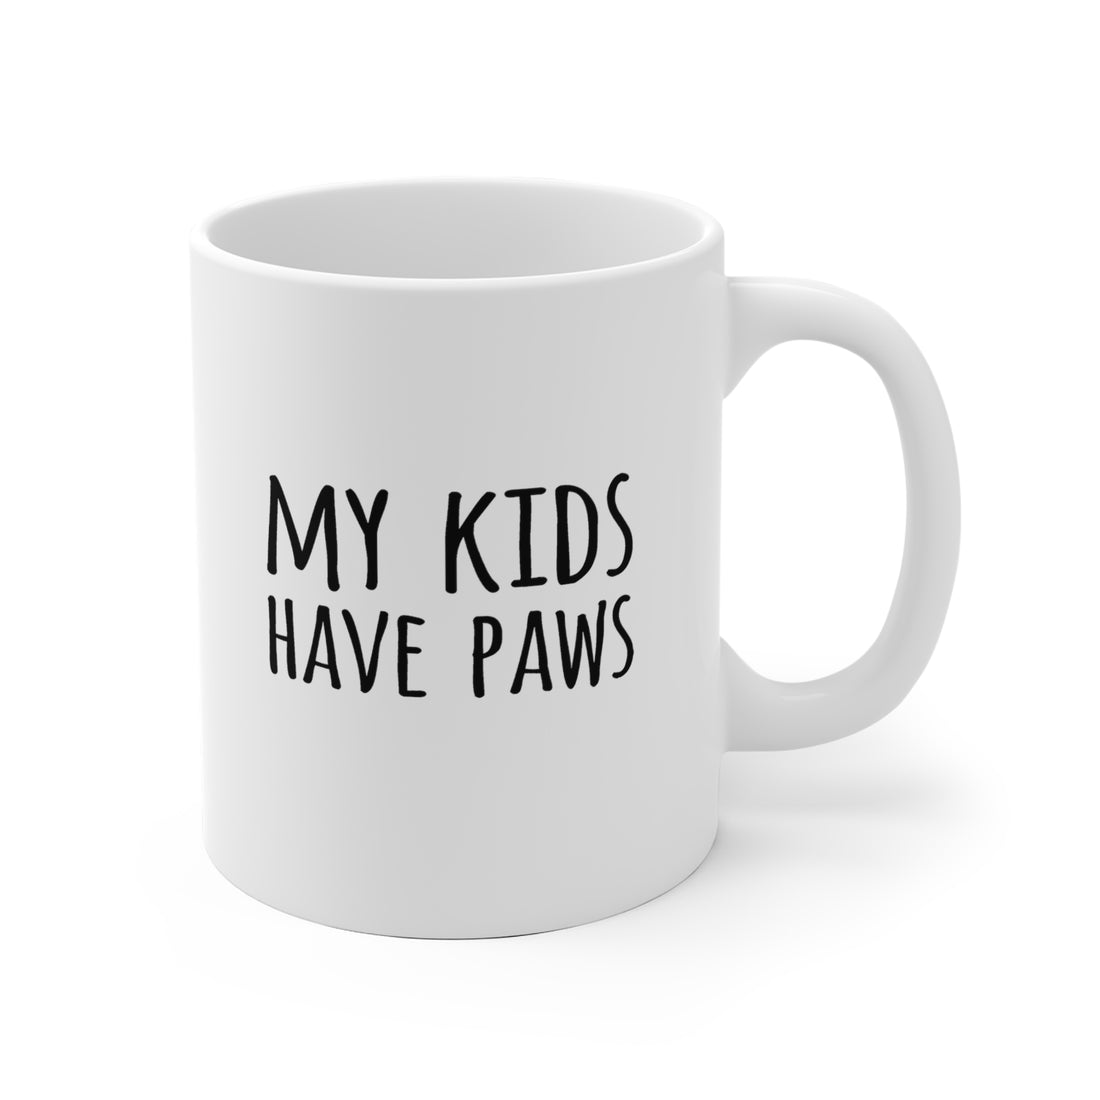 My Kids Have Paws - White Ceramic Mug 2 sizes Available